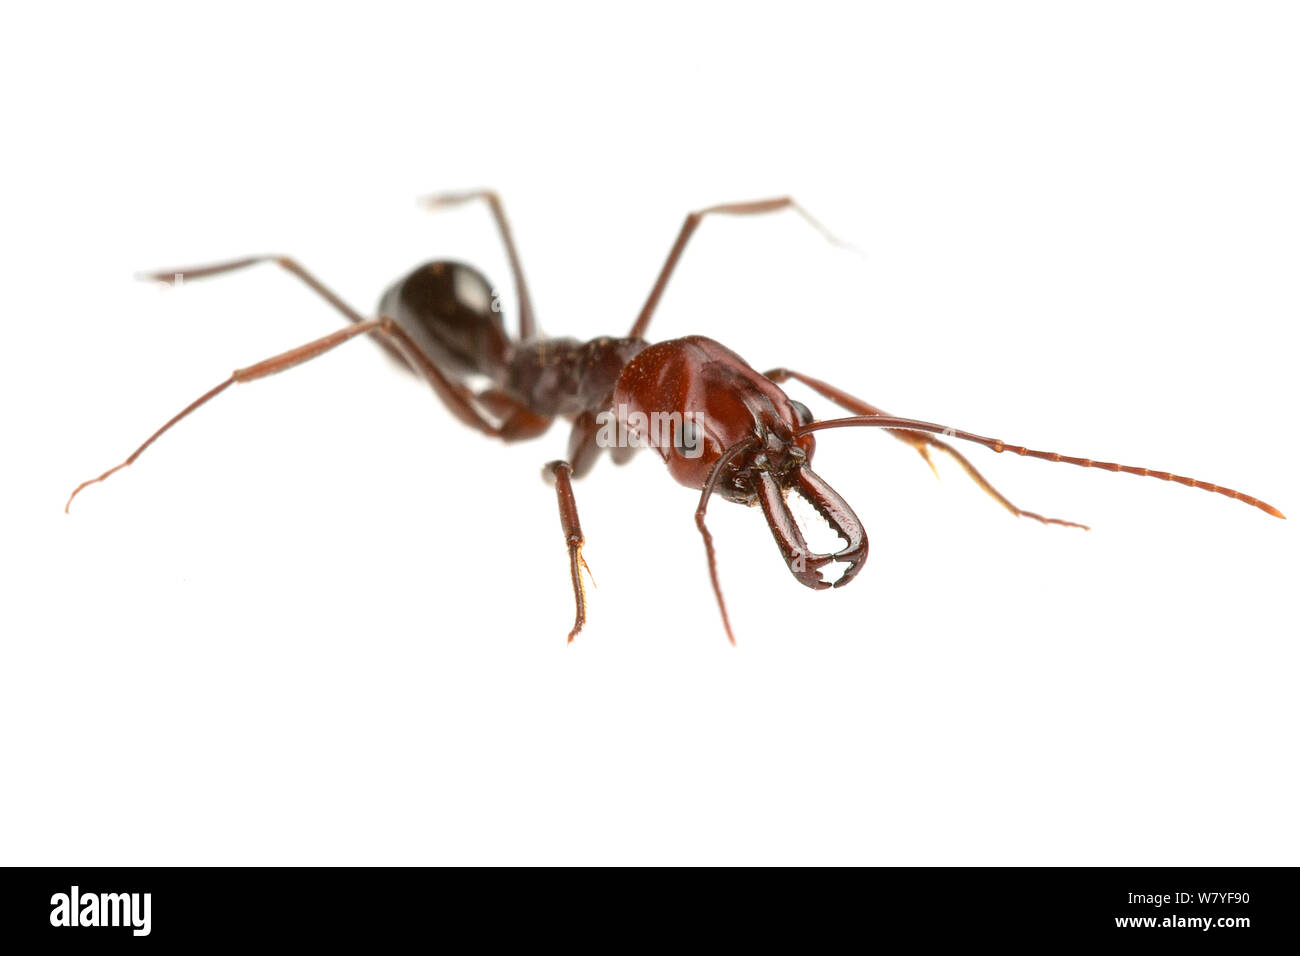 Trap-jaw ant (Odontomachus sp), Western Australia. meetyourneighbours.net project Stock Photo